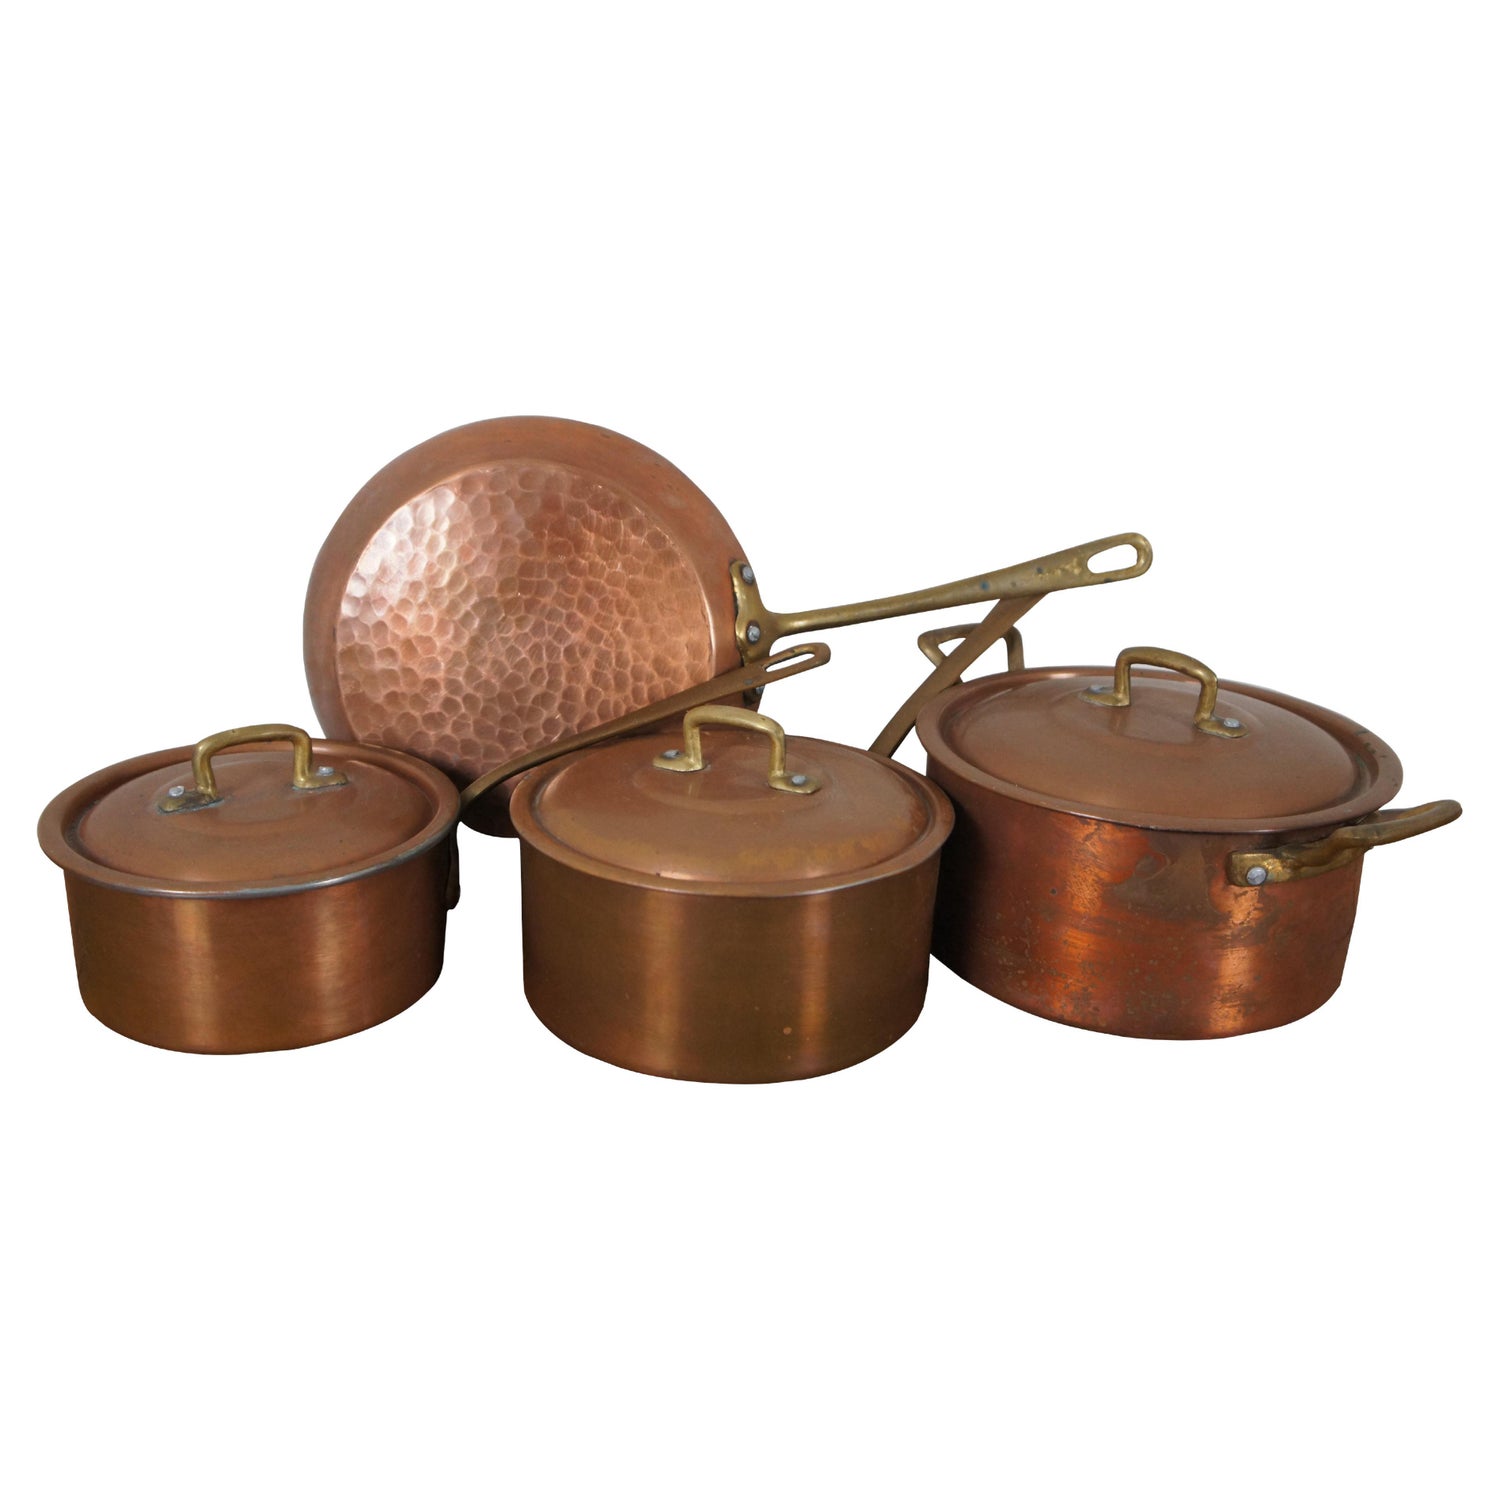 https://a.1stdibscdn.com/4-antique-french-banon-copper-brass-pots-lids-skillet-saute-pan-boiler-for-sale/f_53432/f_329310621677159261562/f_32931062_1677159263097_bg_processed.jpg?width=1500